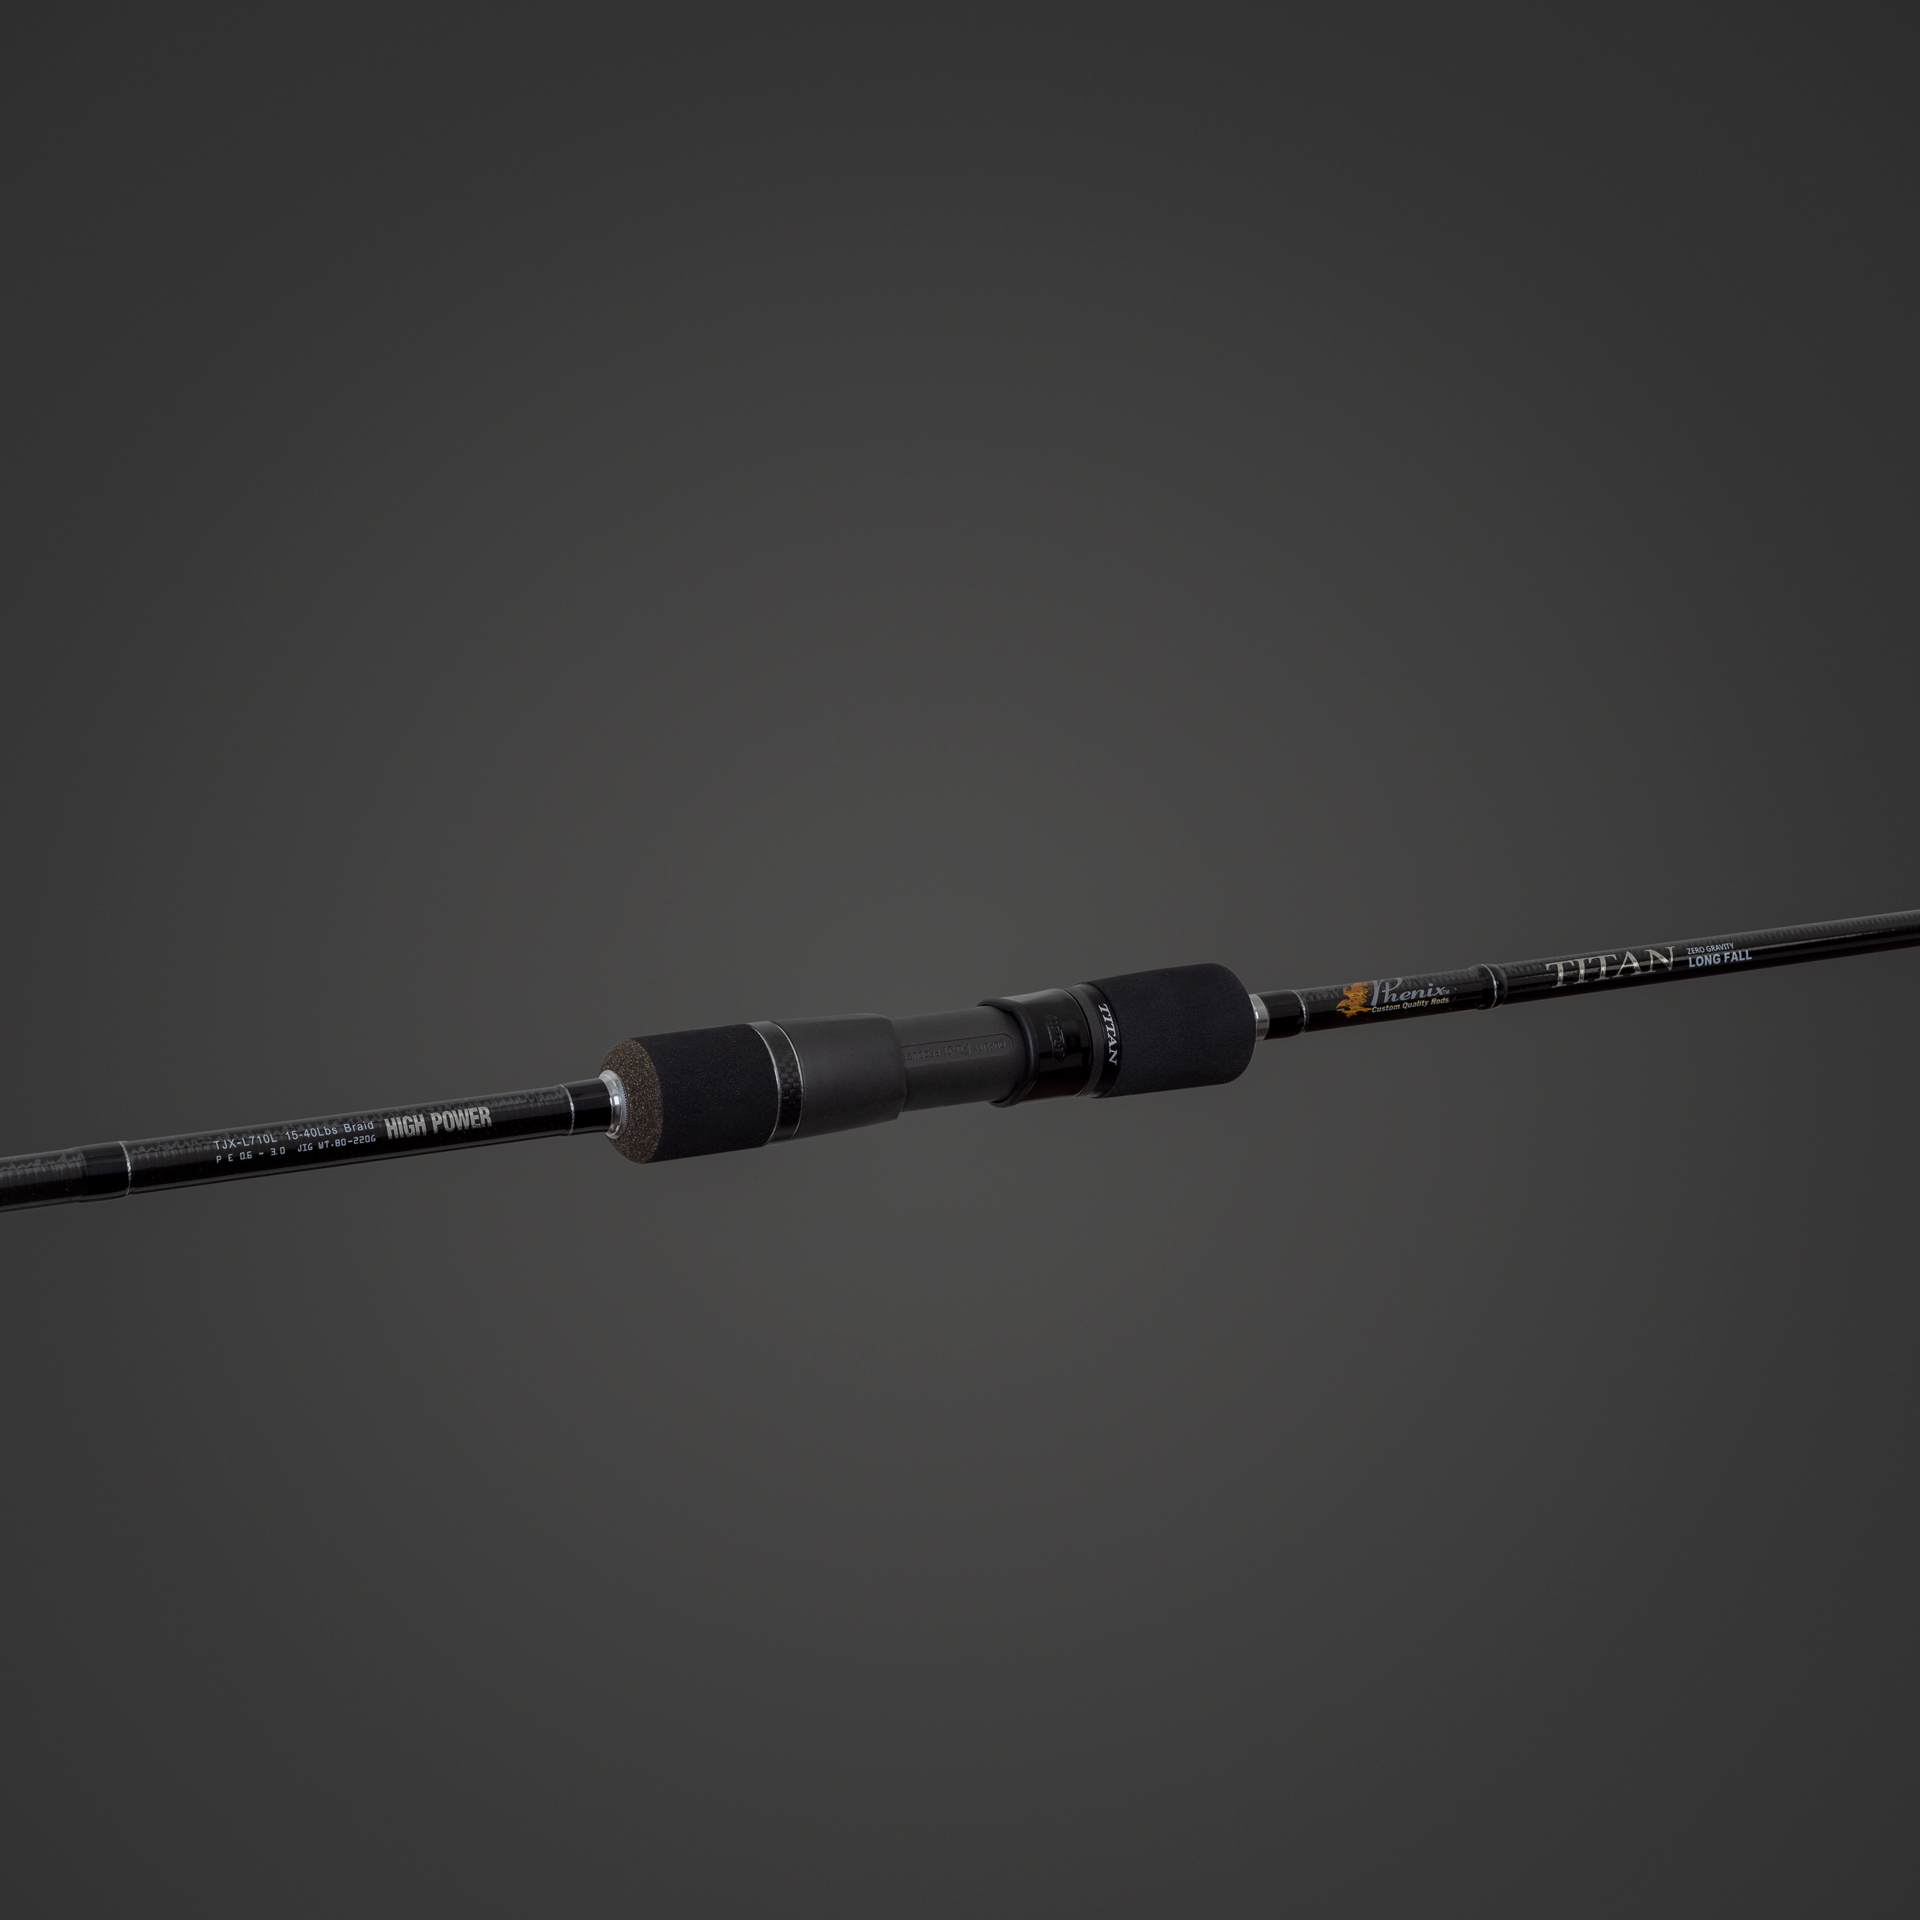 Titan - Long Fall / Stick Bait - Phenix Rods